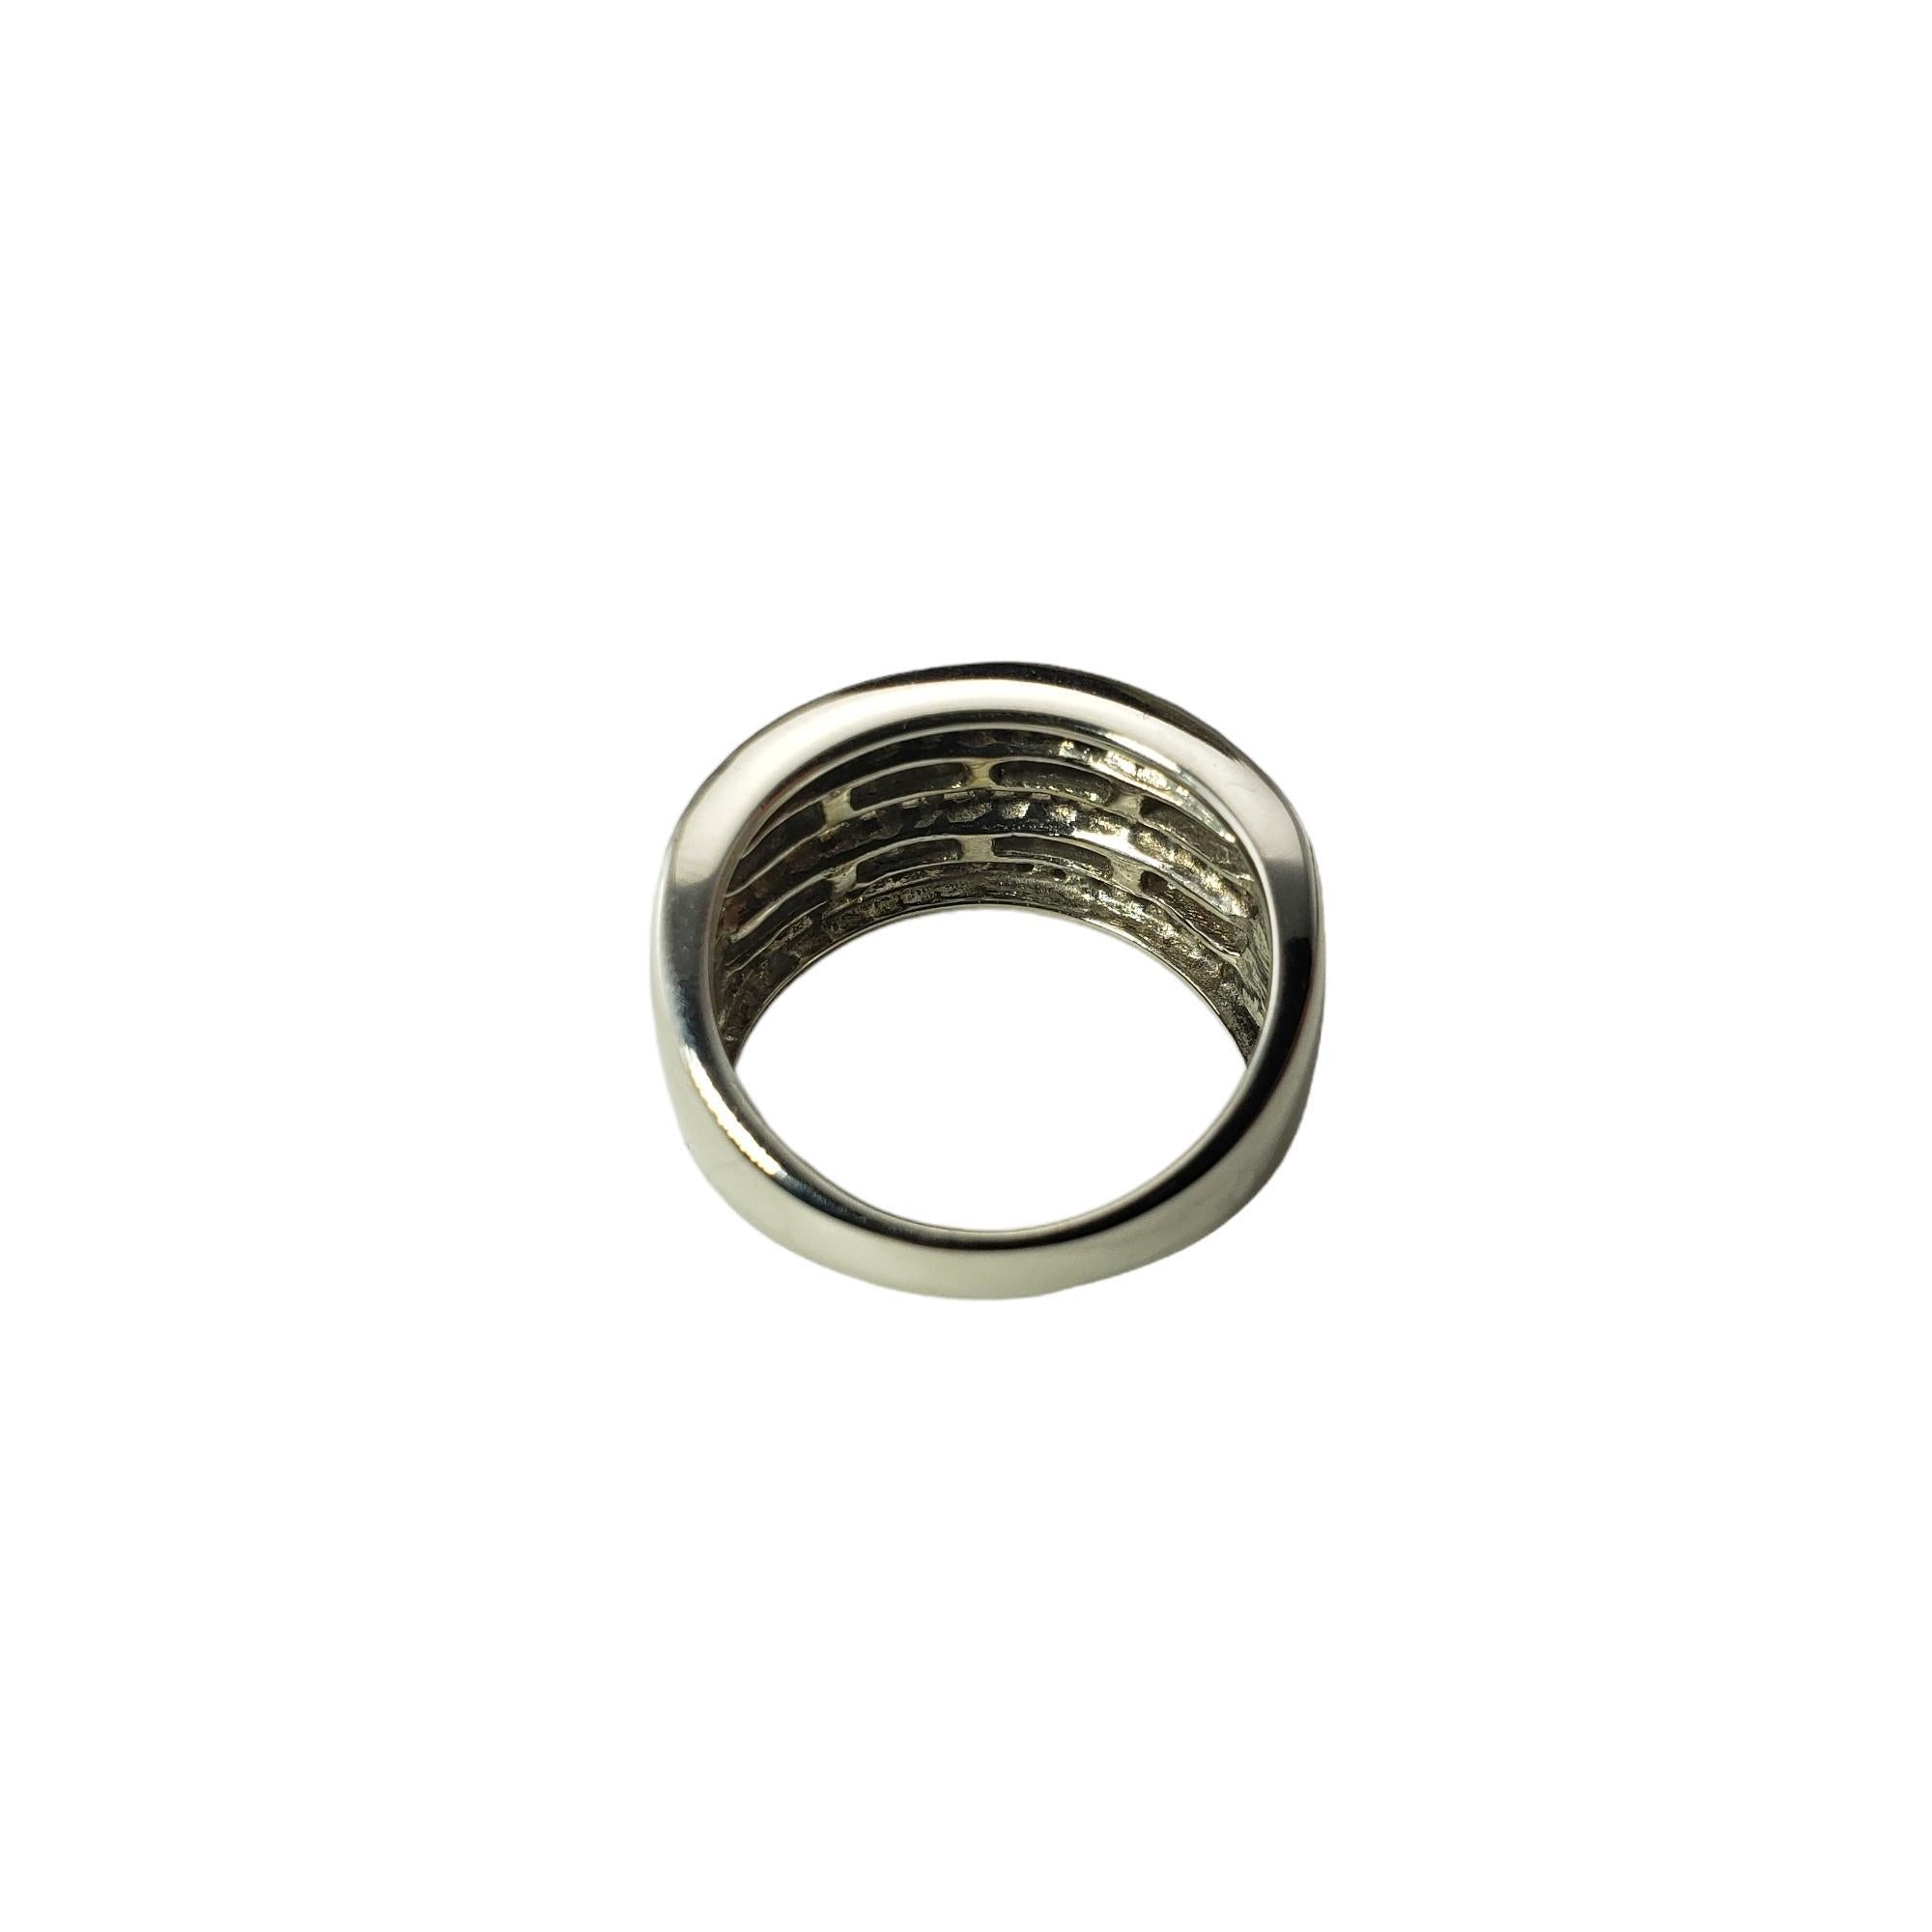  14K White Gold Diamond Ring Size 7 #15375 For Sale 1